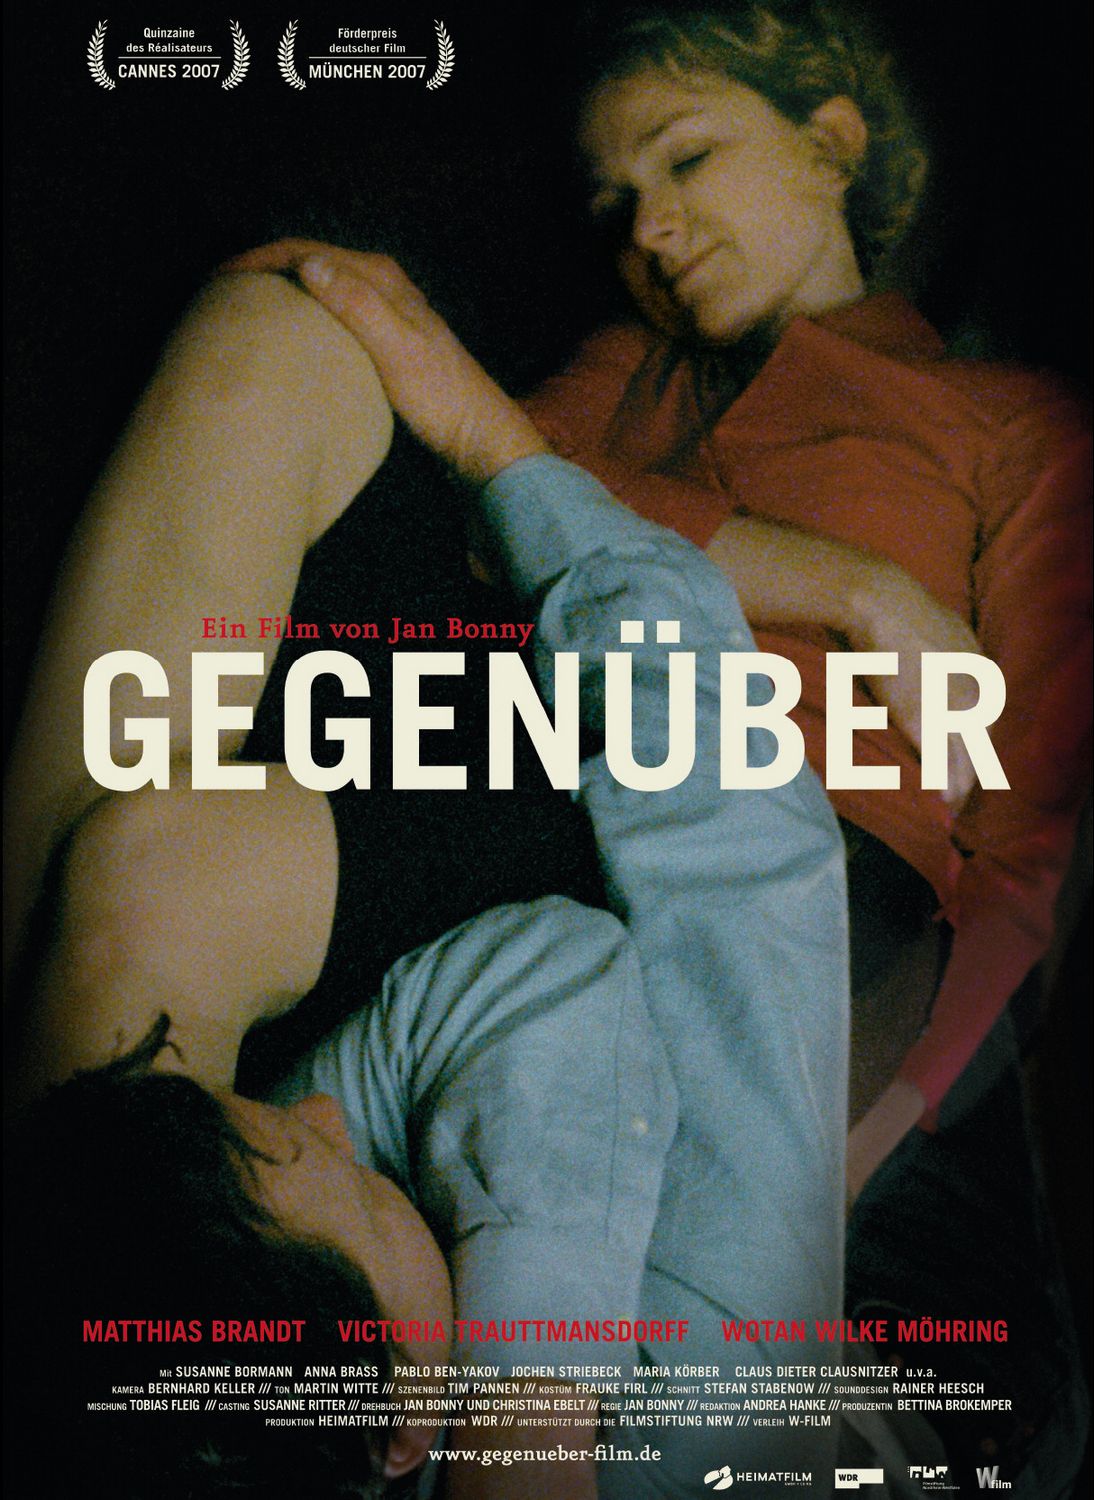 Extra Large Movie Poster Image for Gegenüber (#1 of 2)